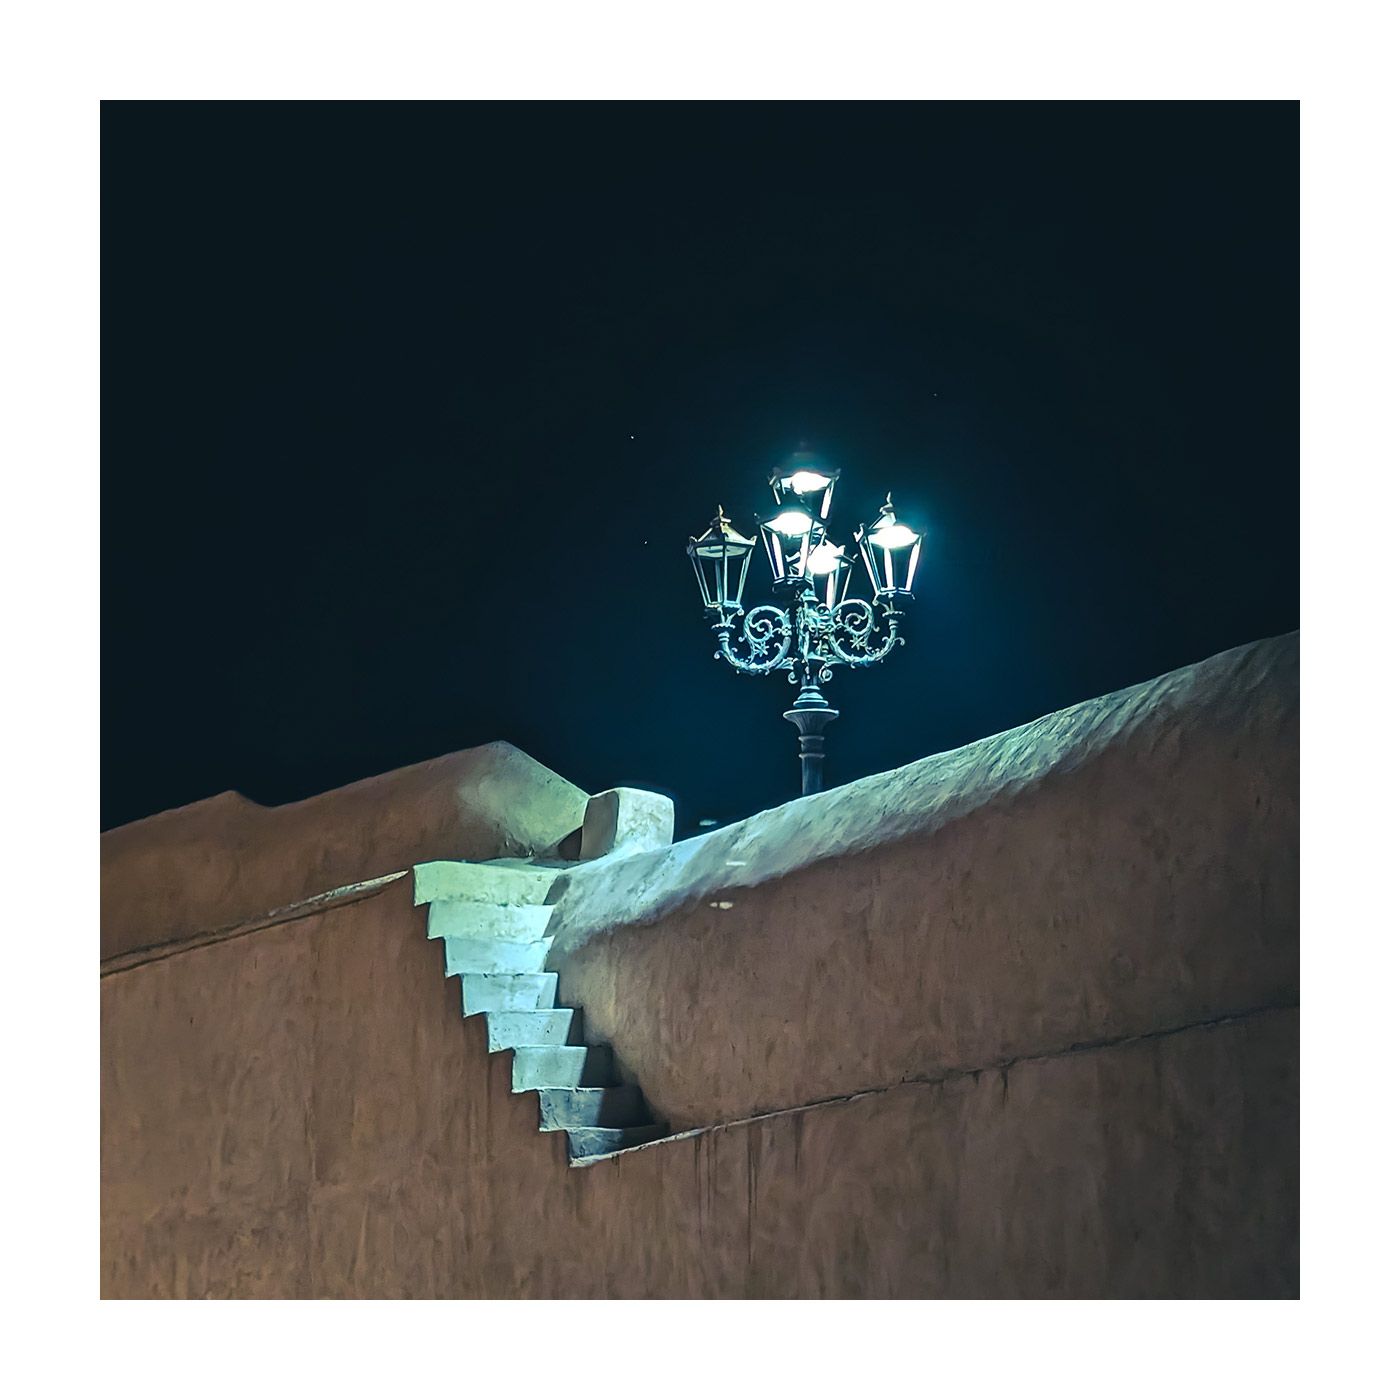 "Lanterns of Casbah", Casbah, Marrakech, Apr 2024

#casbah #marrakech #CasbahNight #NightPhotography #HistoricCasbah #CityOfLights
#ArchitecturalPhotography #kersavond #urbanpresents #photography #pixel8pro #lightroom